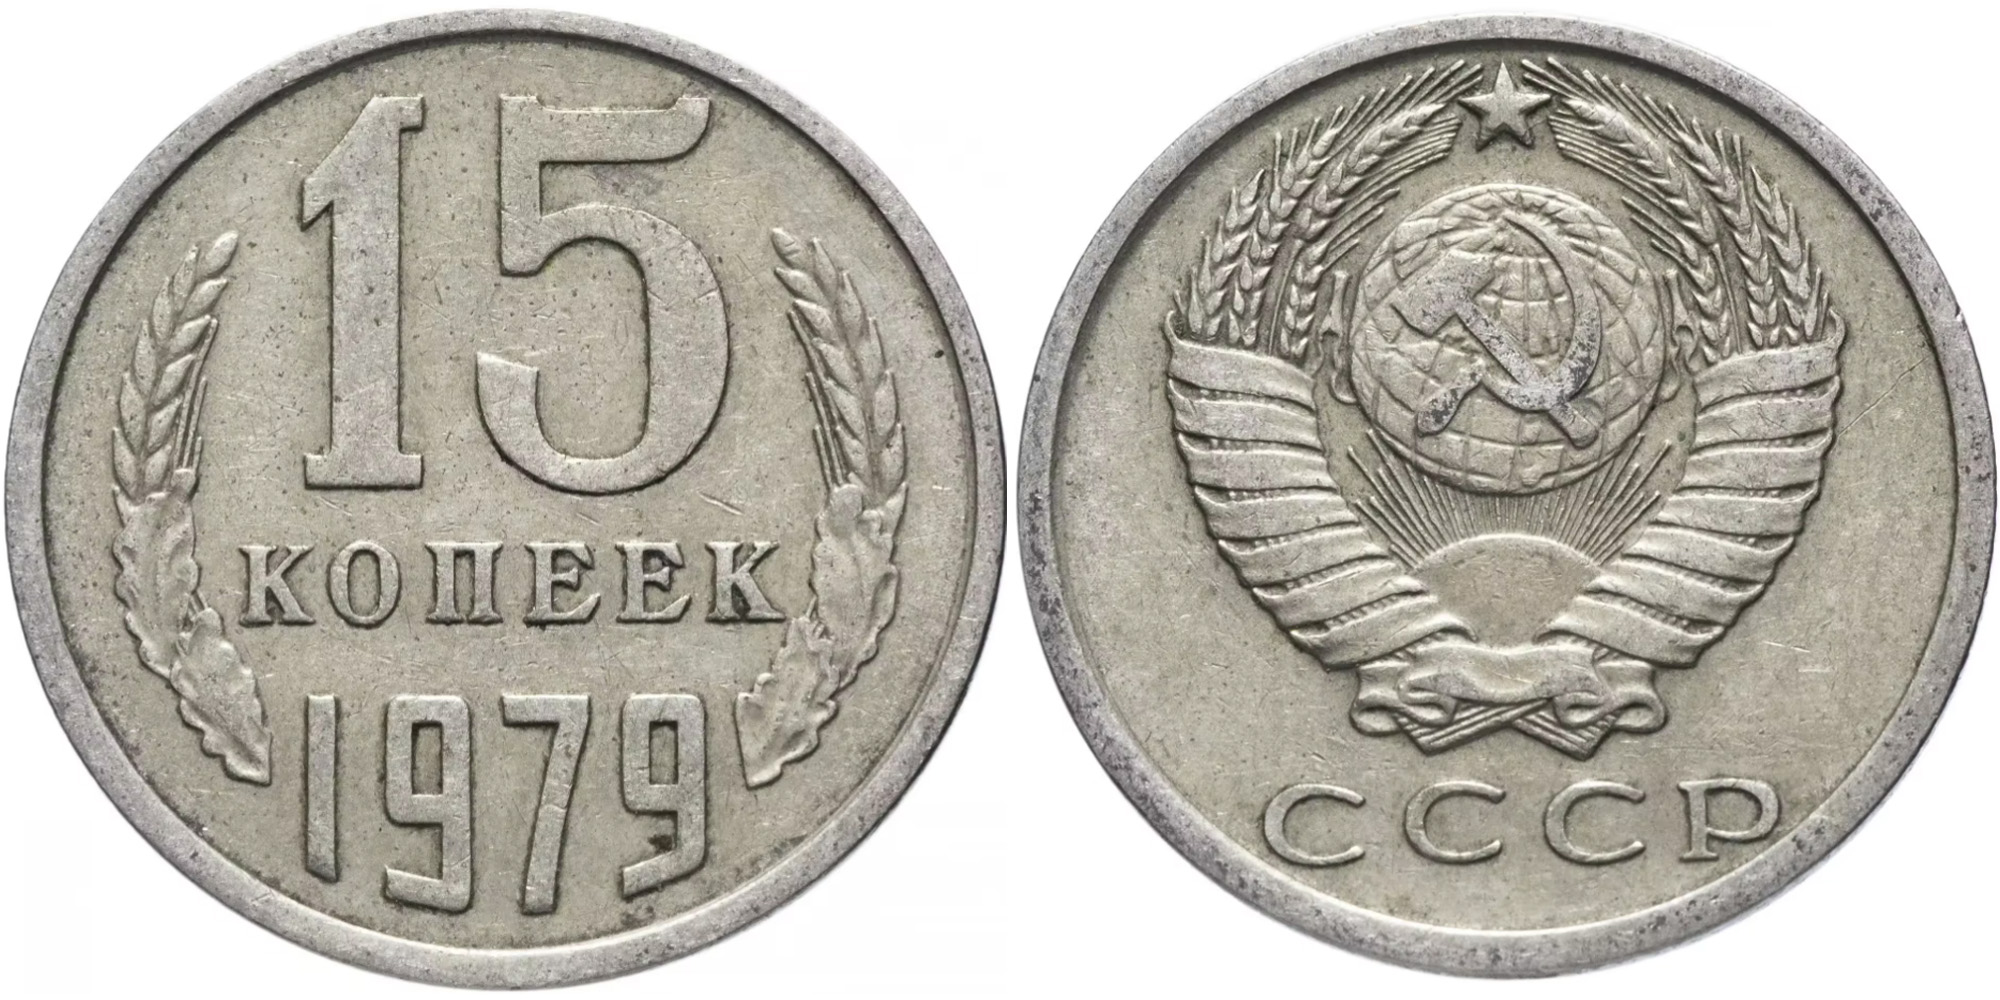 15 копеек 1979 СССР